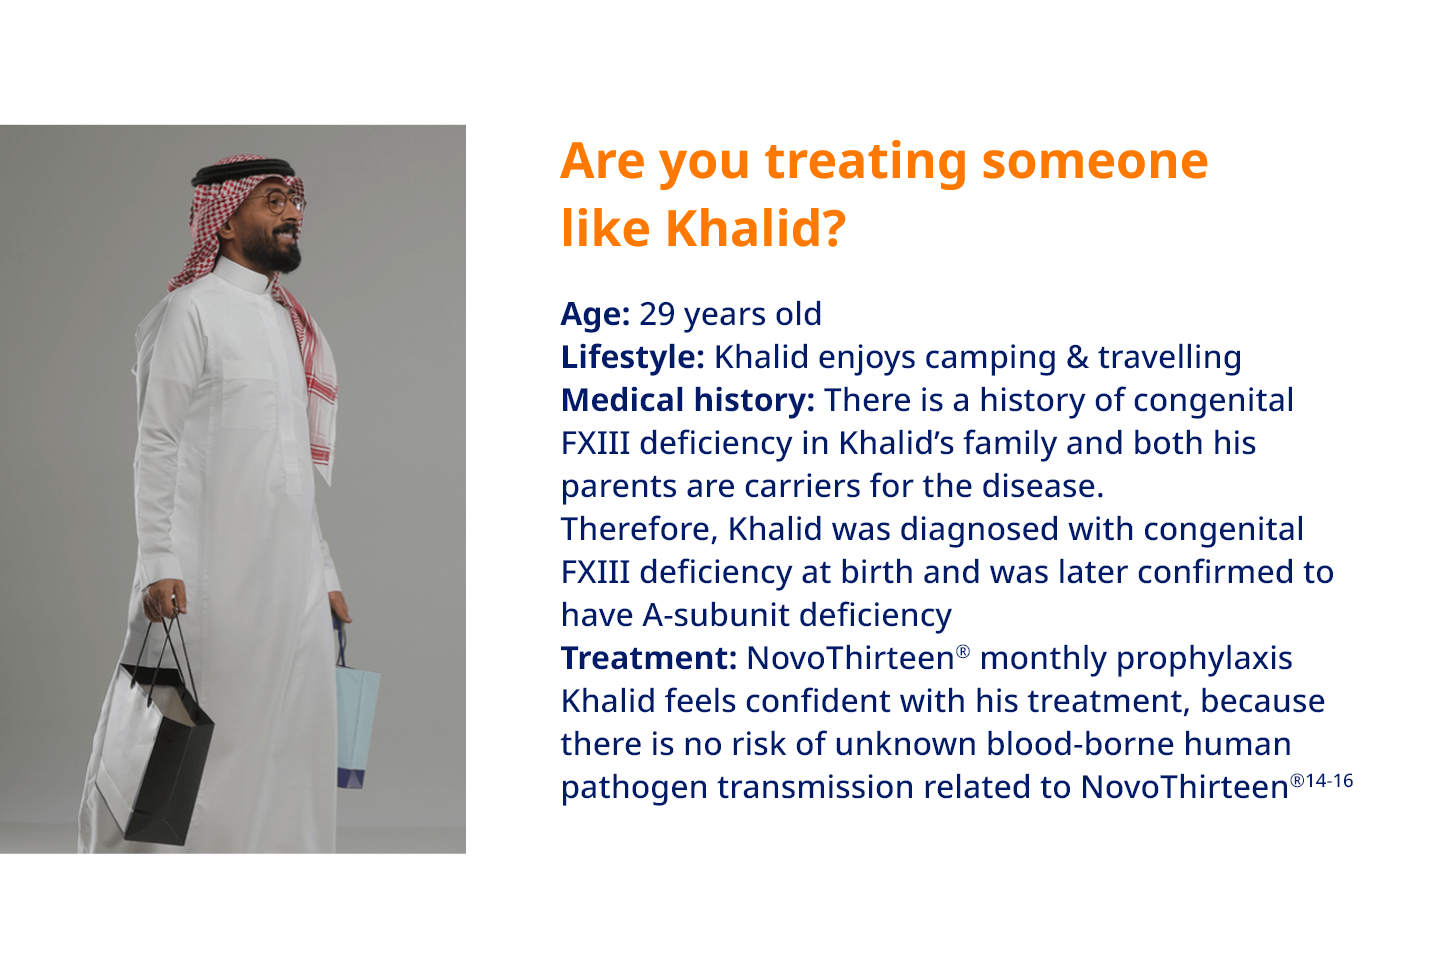 Khalid 29 years